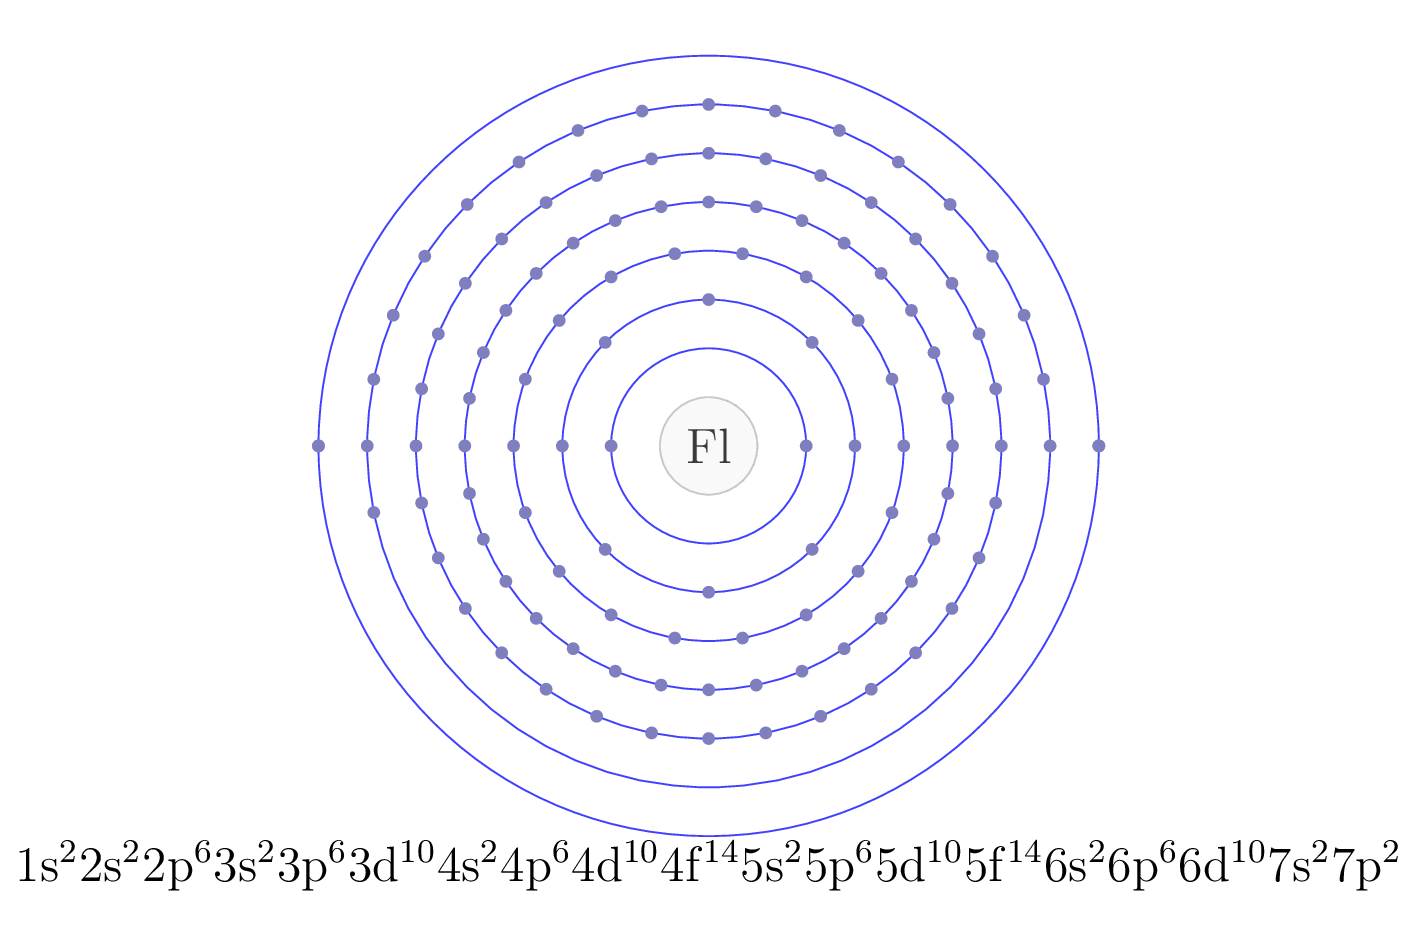 electron configuration of element Fl